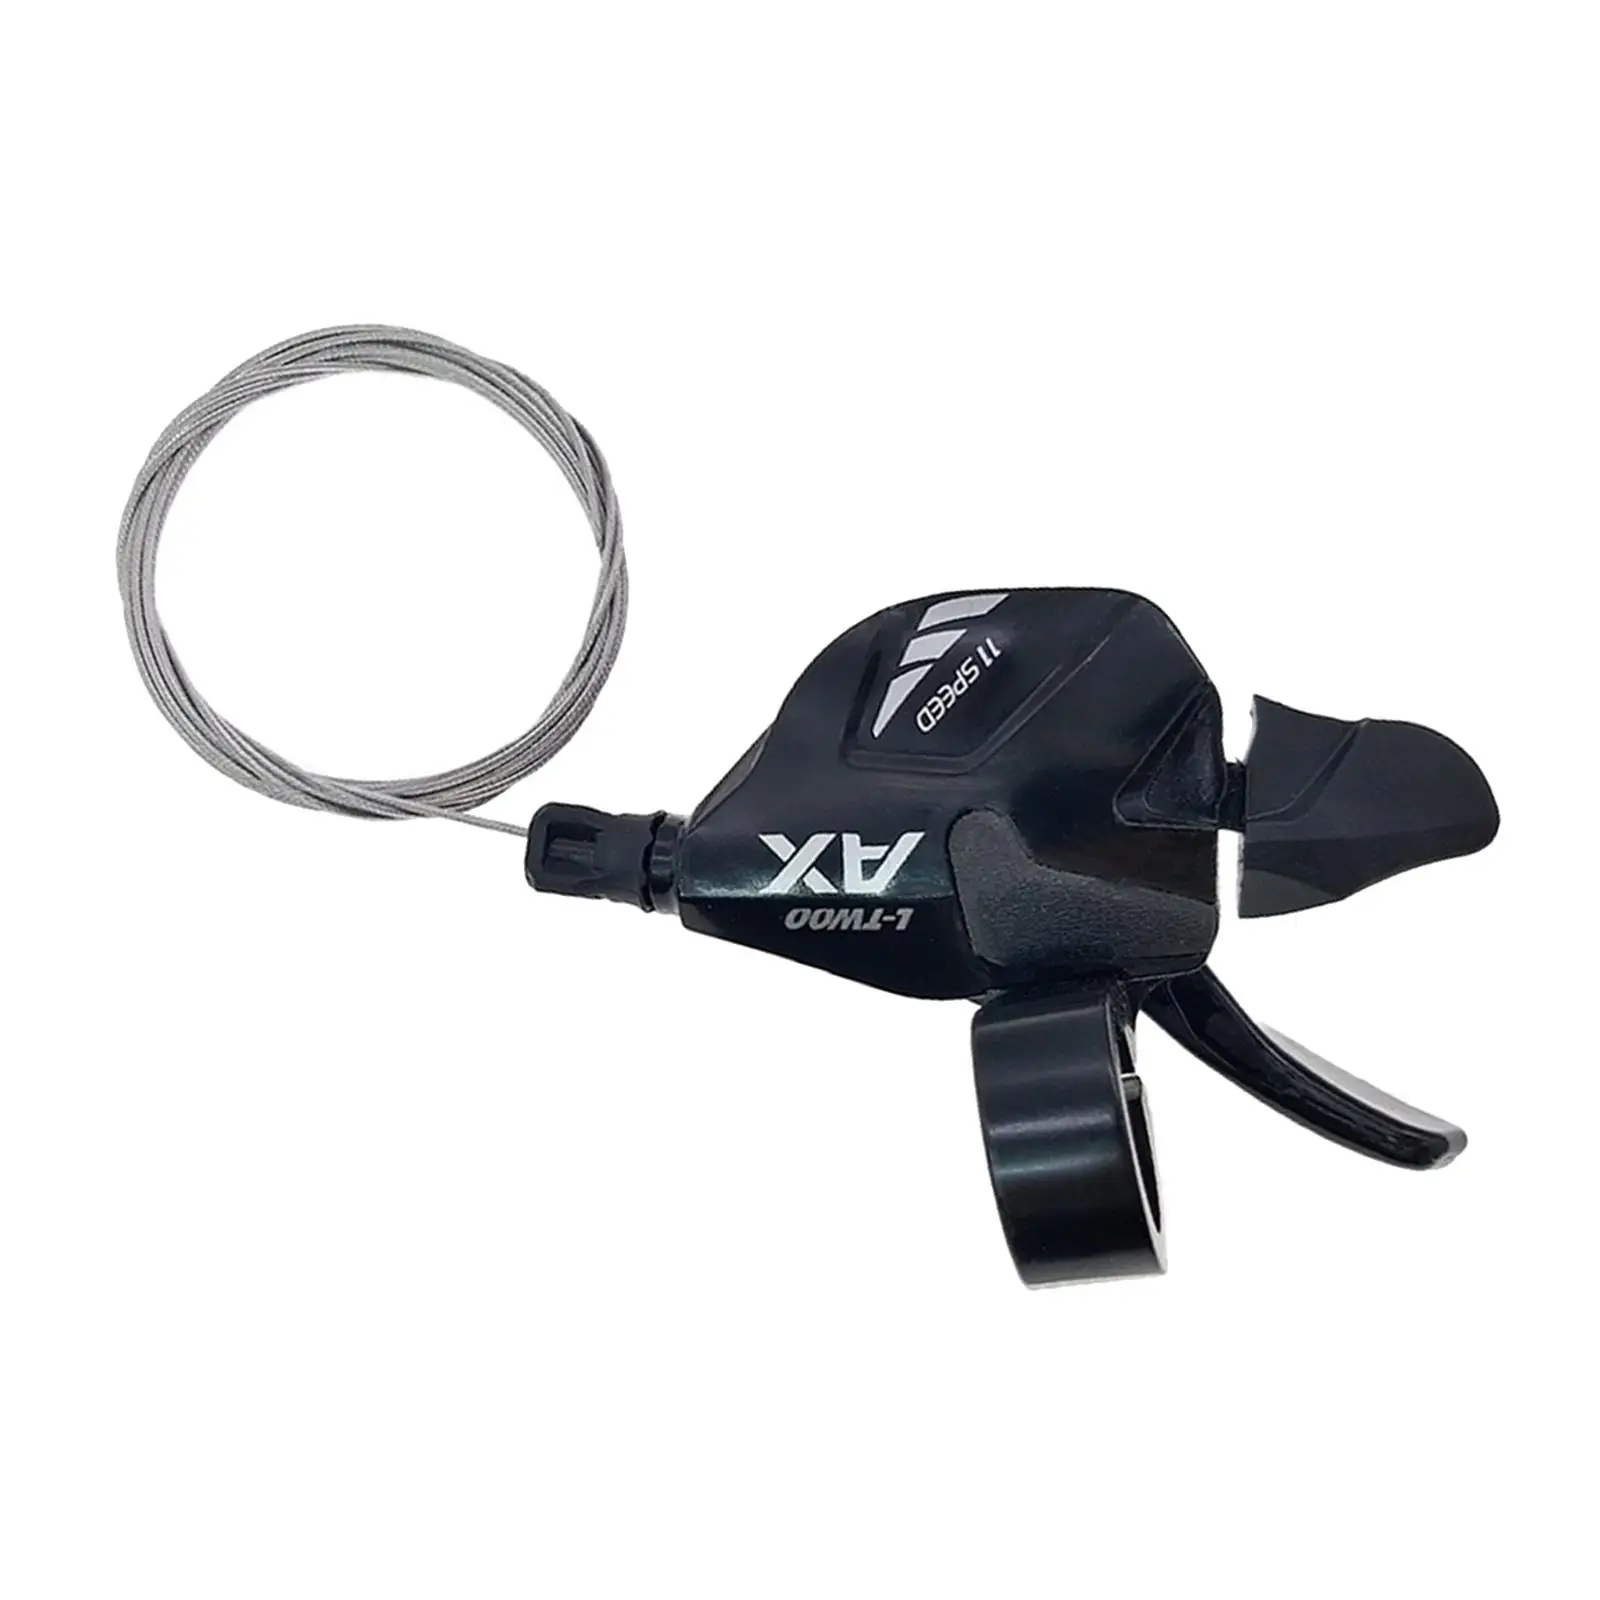 AX 1x11 Bike Right Shifter Thumb Gear Shifter